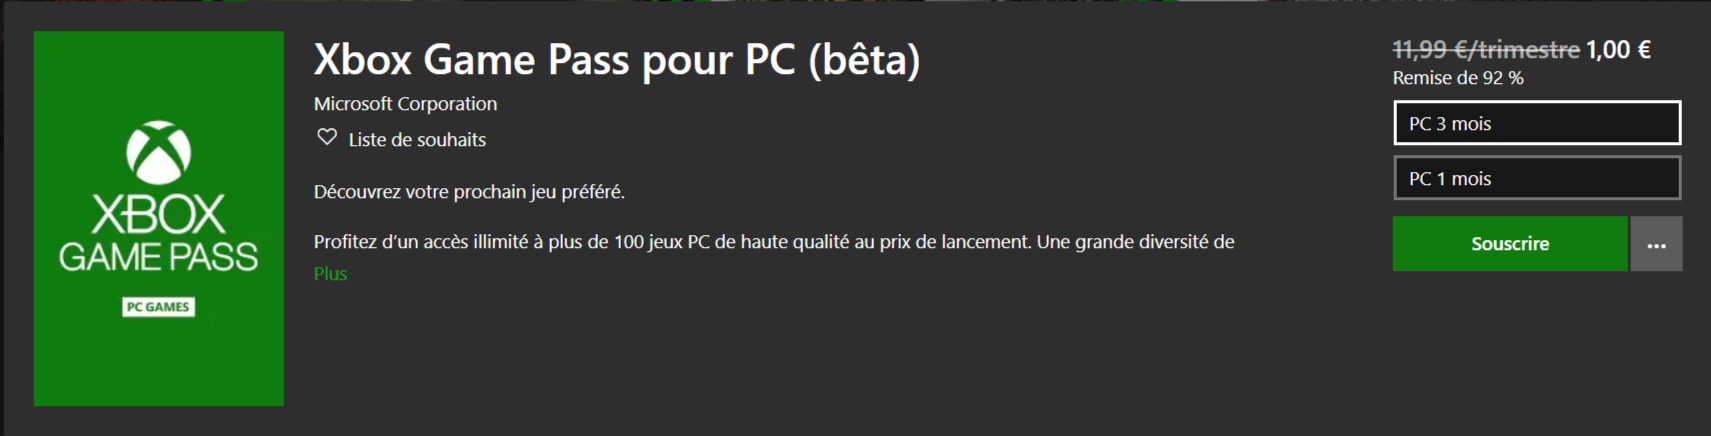 Acheter Xbox Game Pass pour PC  bêta  - Microsoft Store fr-FR (2).jpg